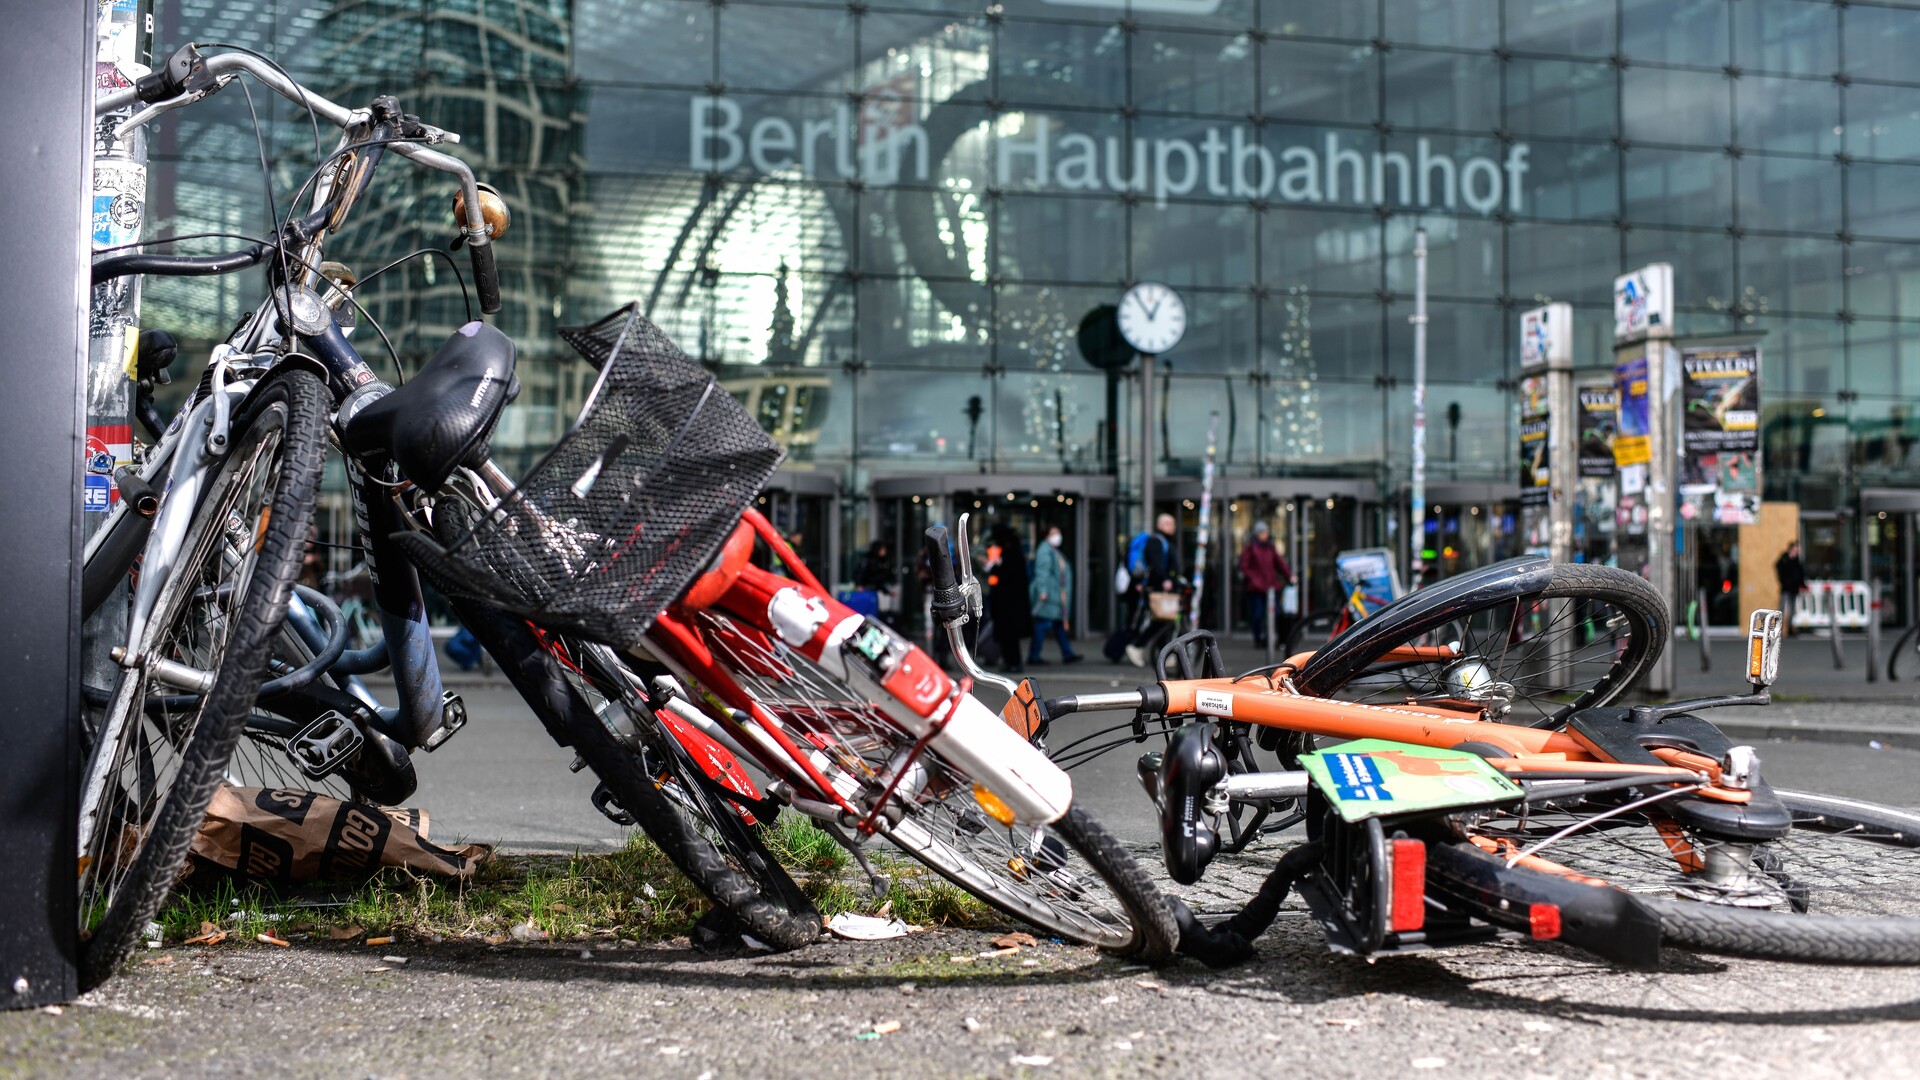 Angeschlossene kaputte, geklaute oder vergessene Fahrraeder am 3. Januar 2023 in Berlin. Hauptbahnhof (Bild: imago-images/Funke)